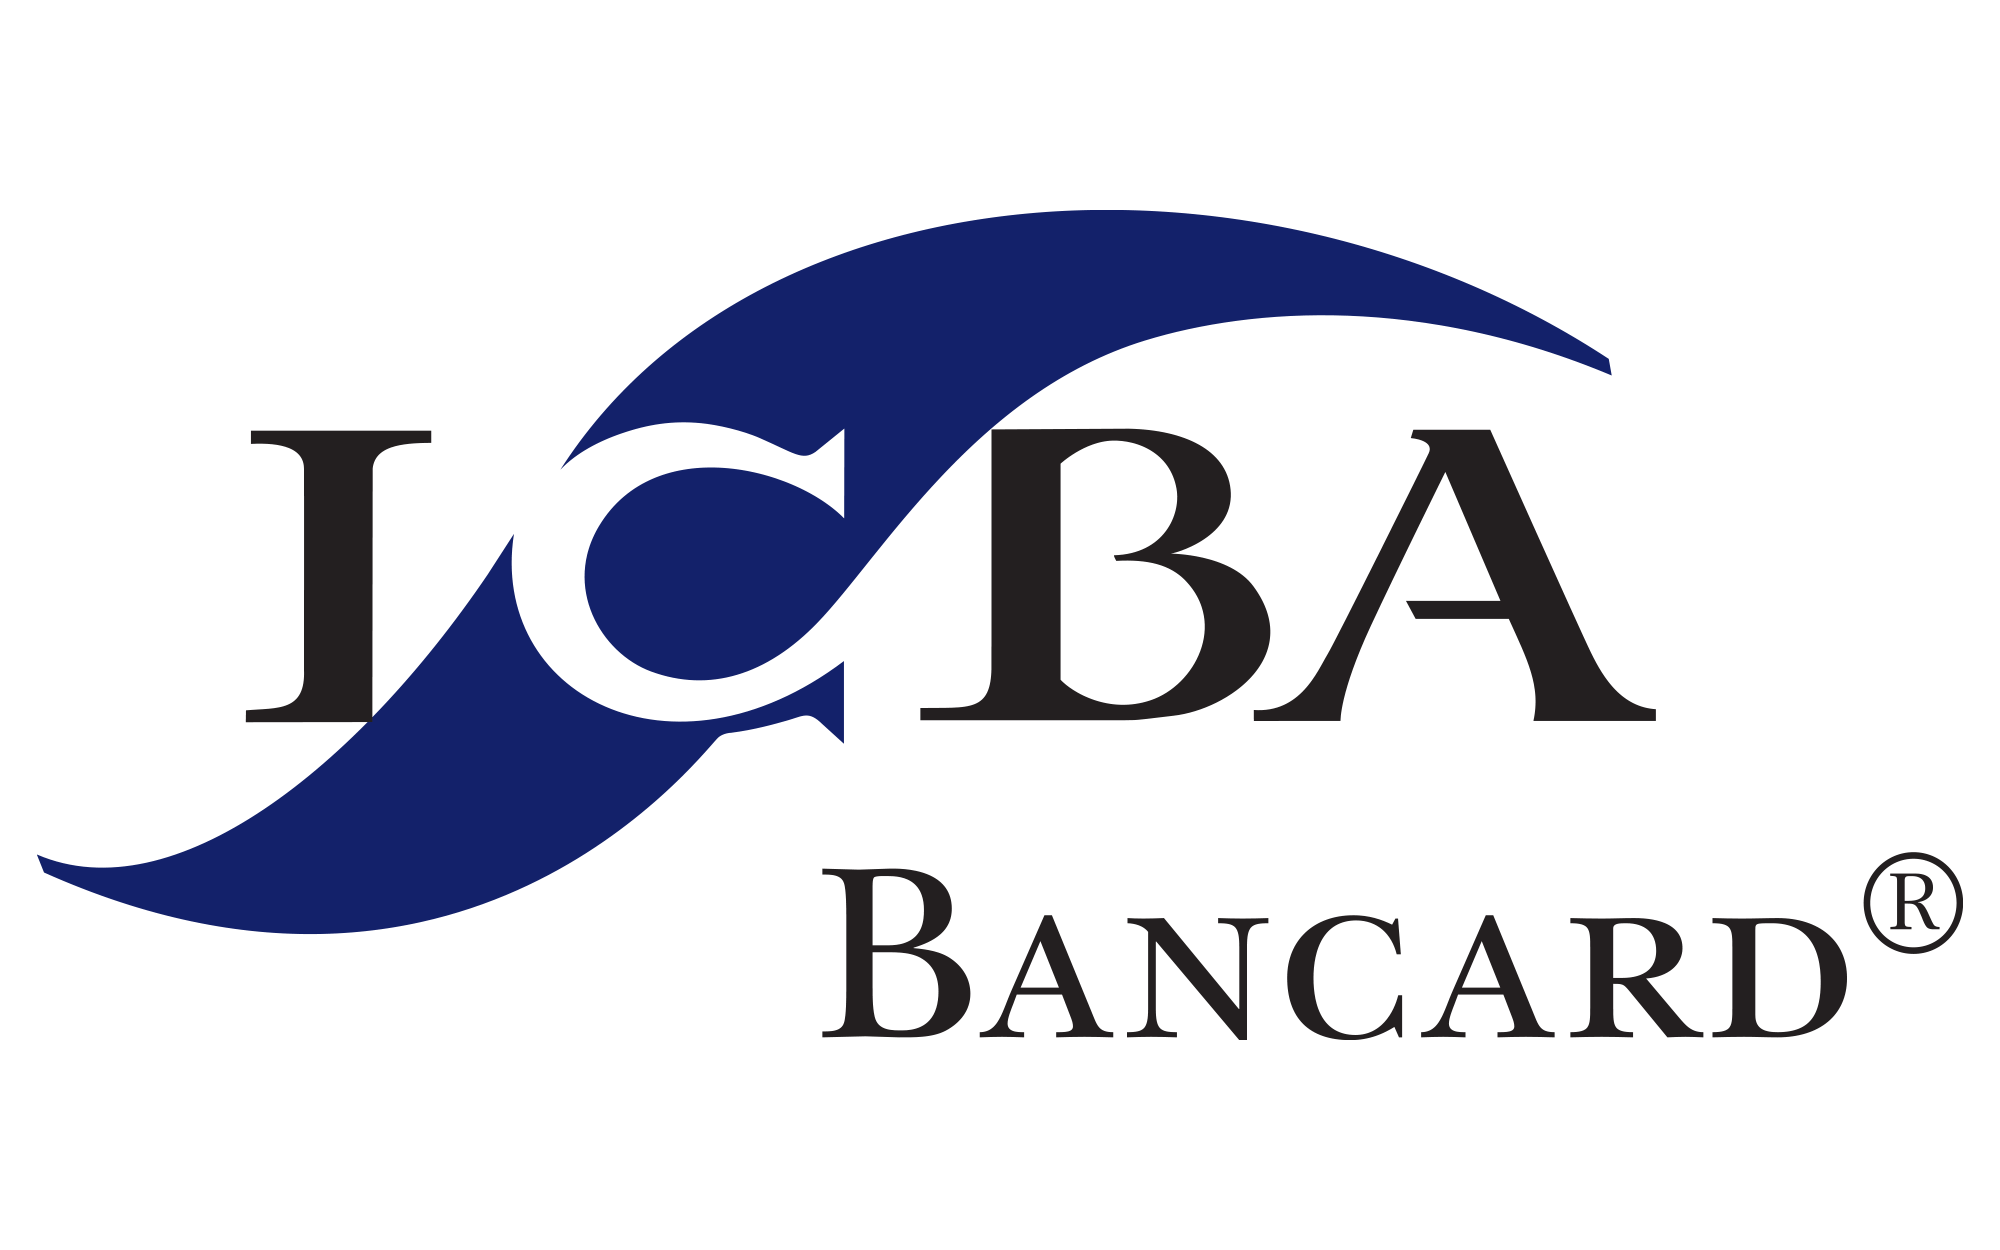 ICBA Bancard